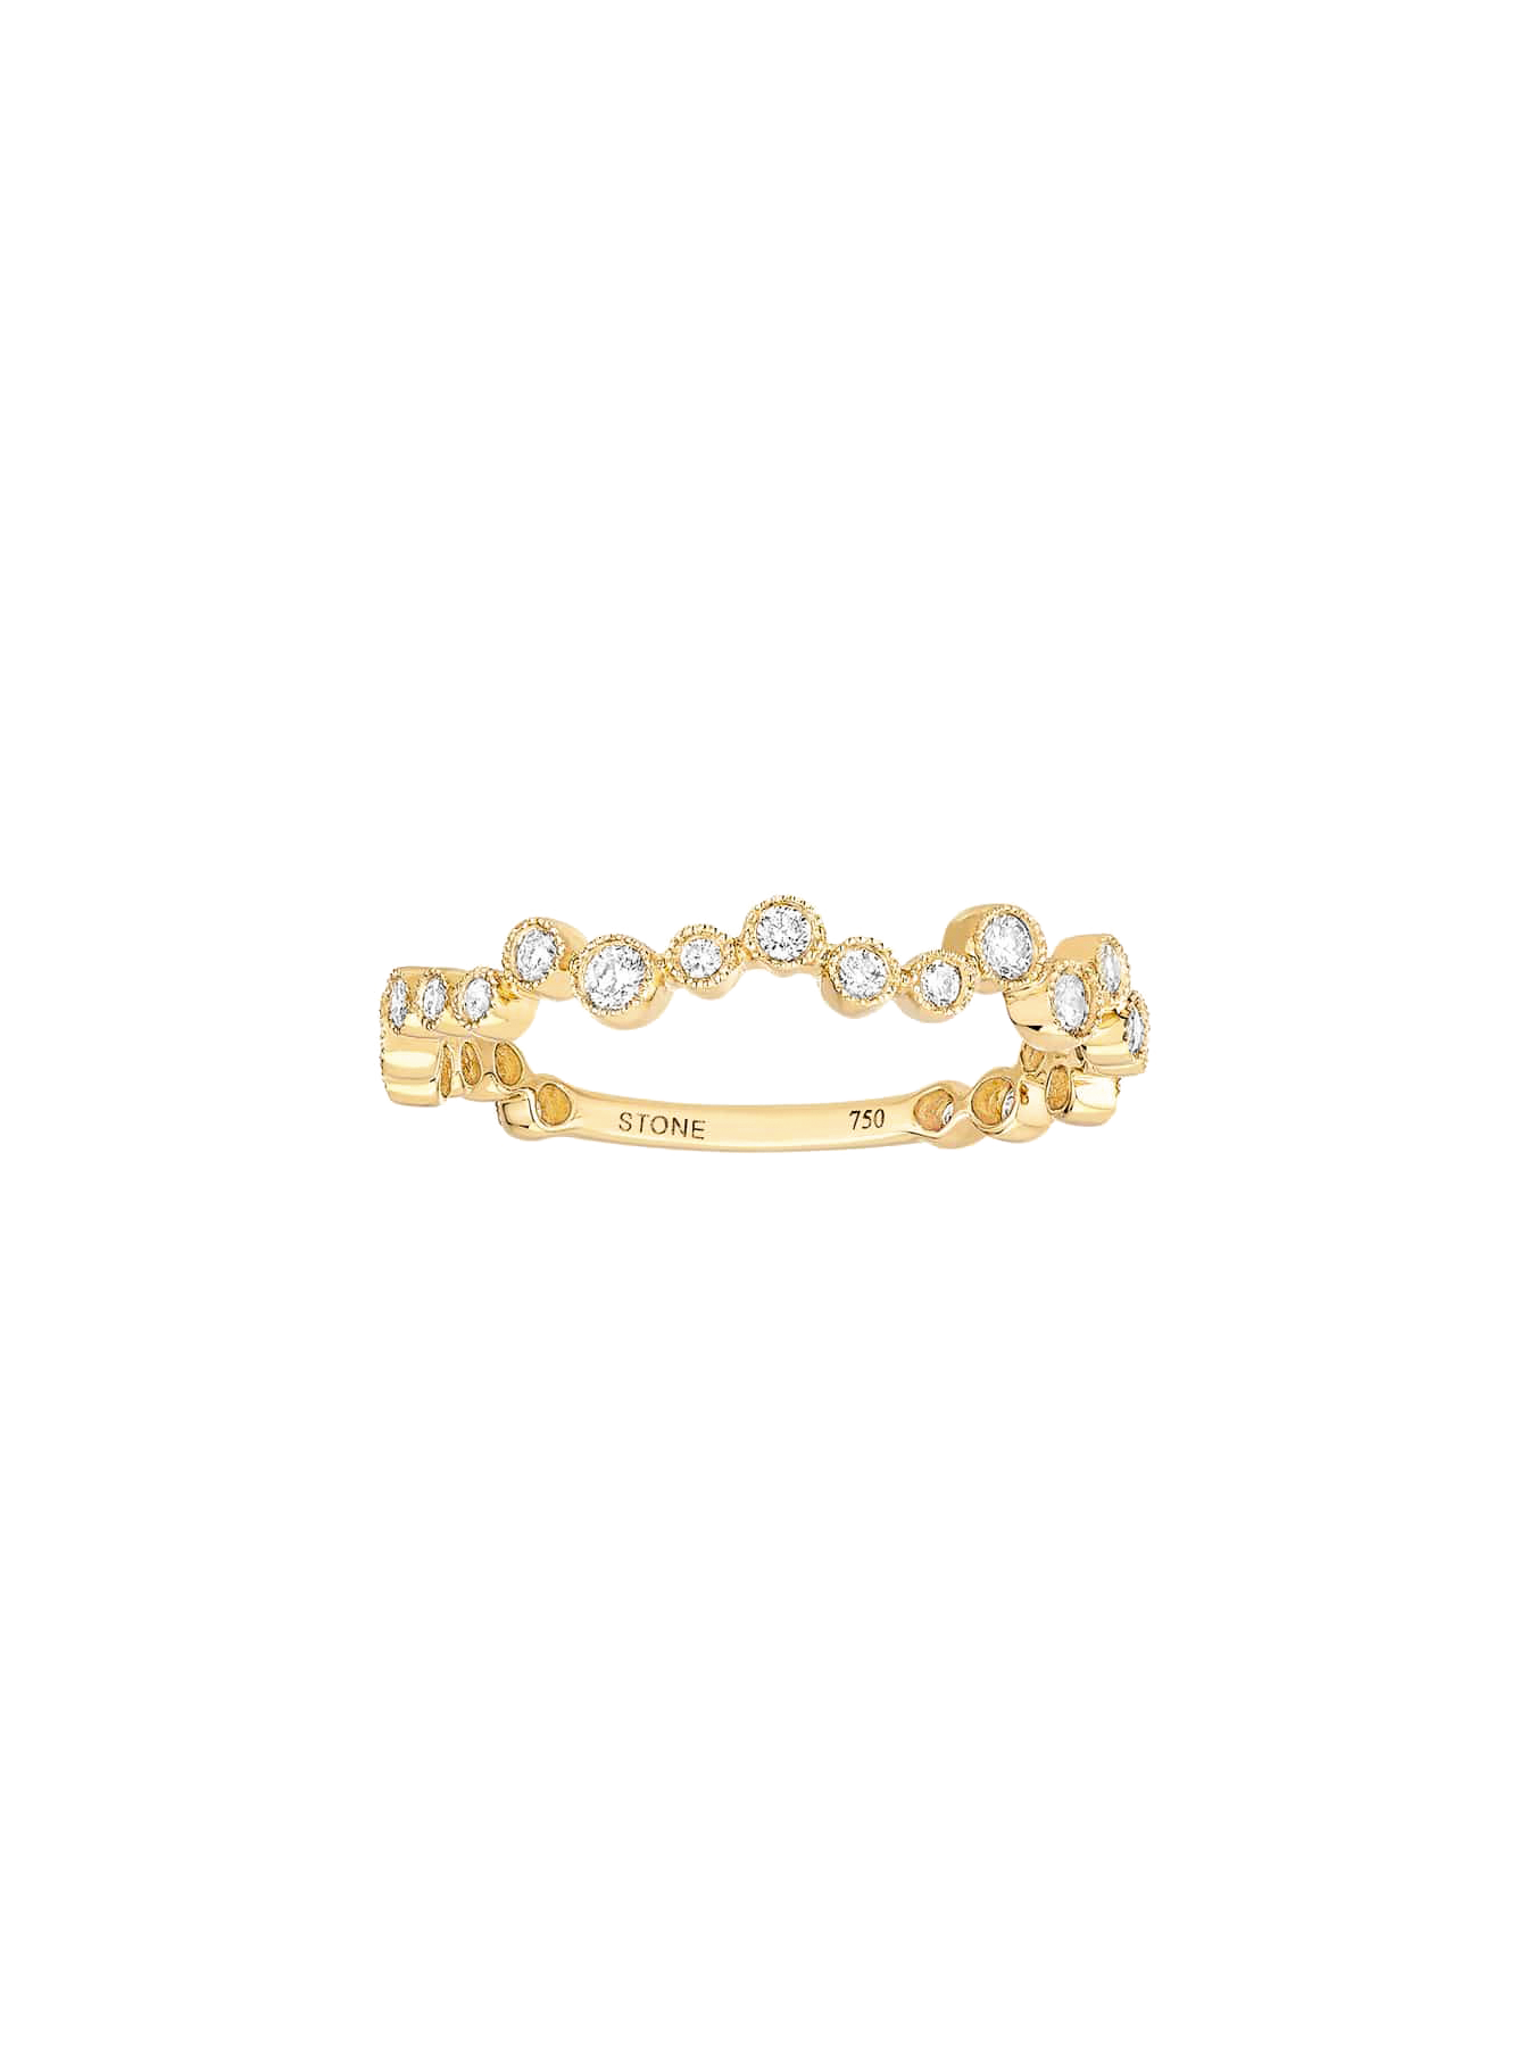 Simply beautiful Gold ear ring... - Haji Ismail Jewellers | Facebook